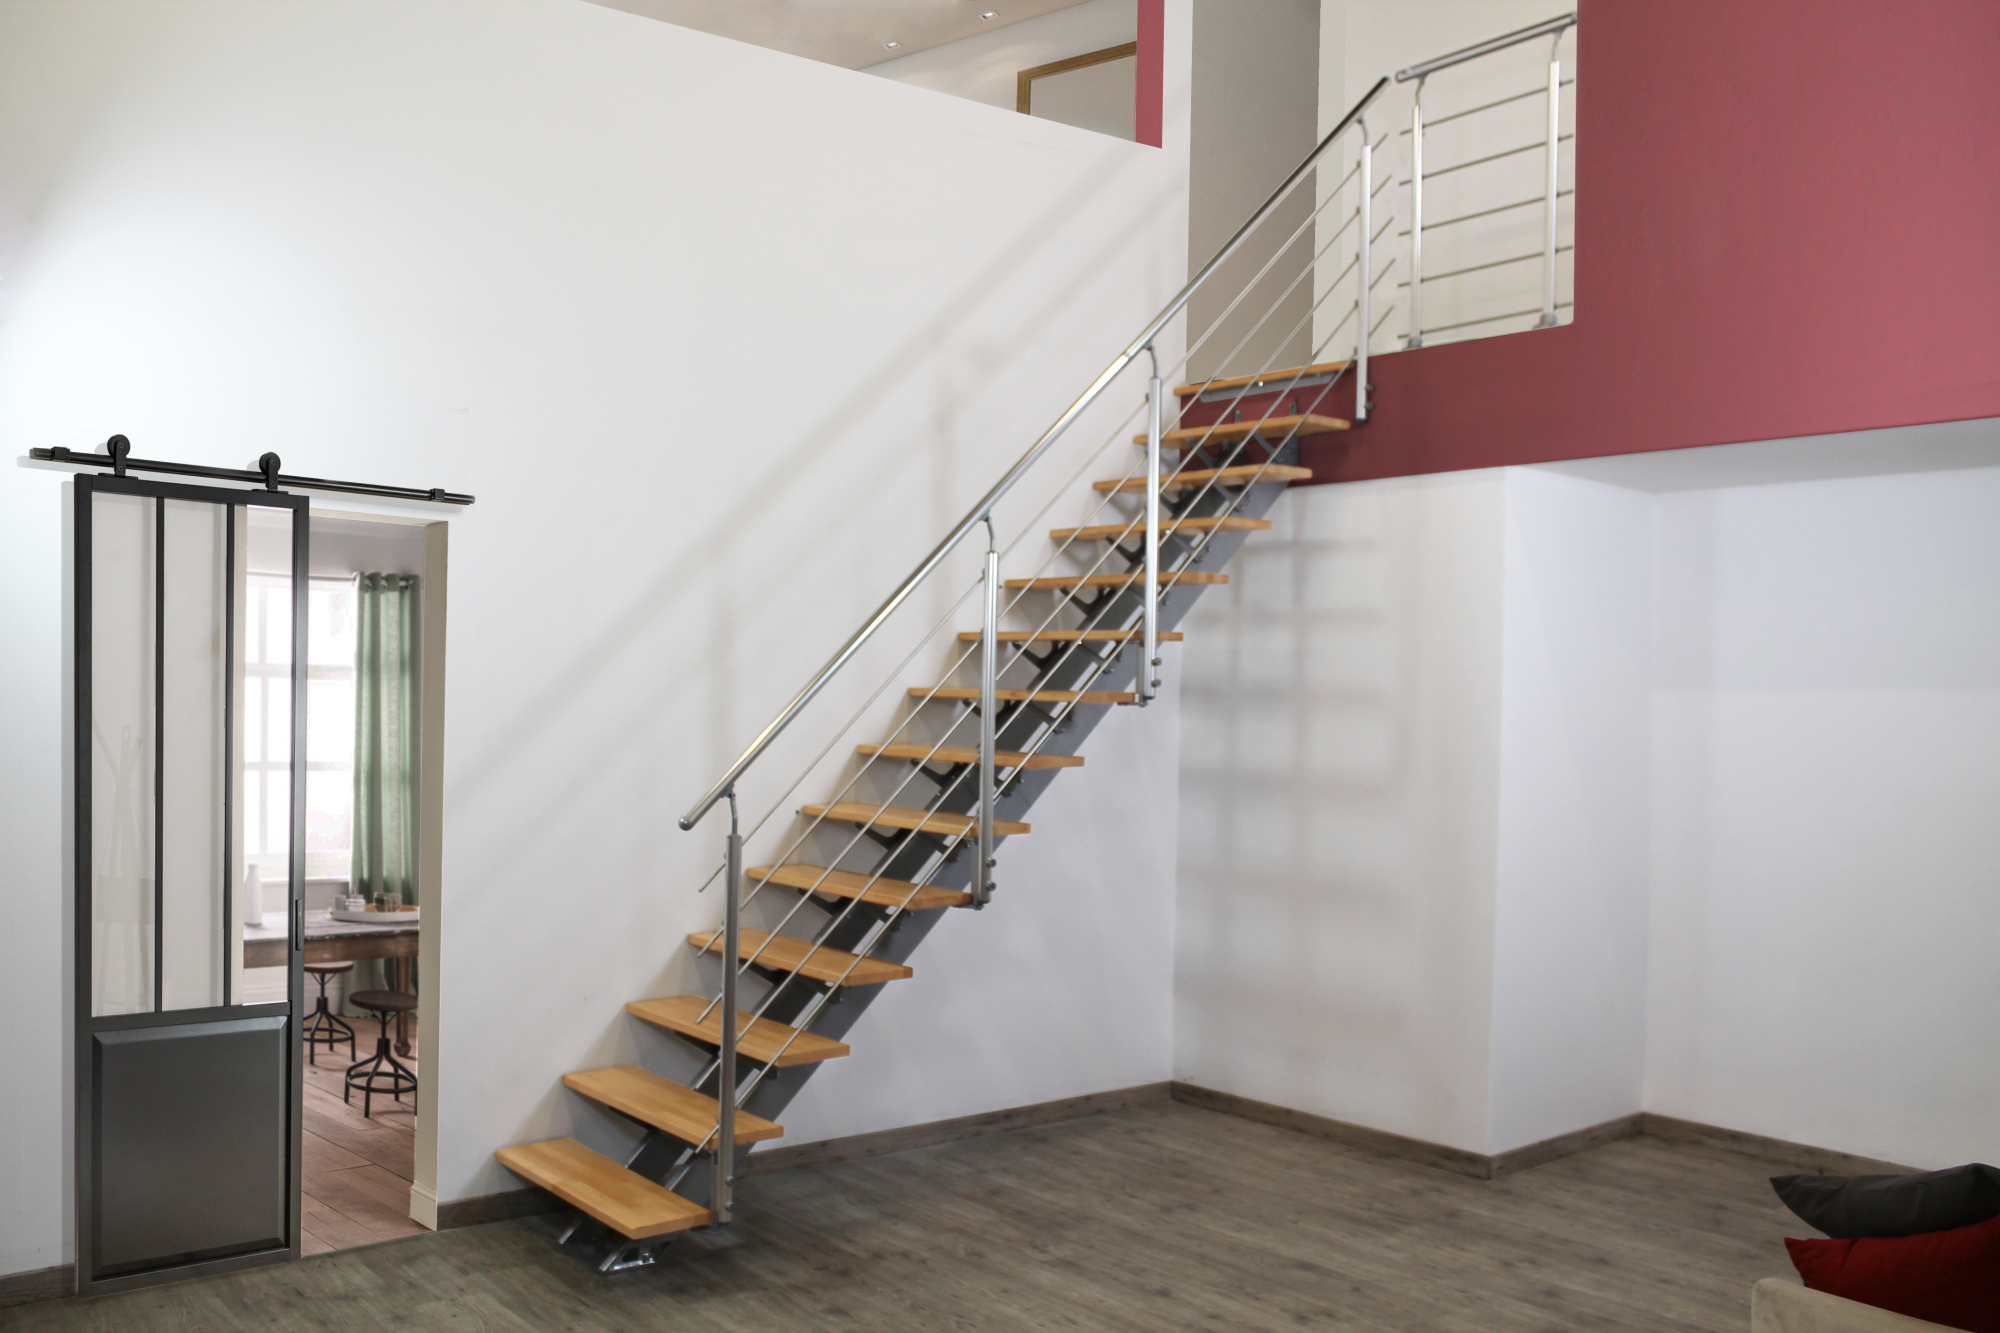 Escalera recta doble viga uso interior ancho total 95cm acabado gris/haya/alum